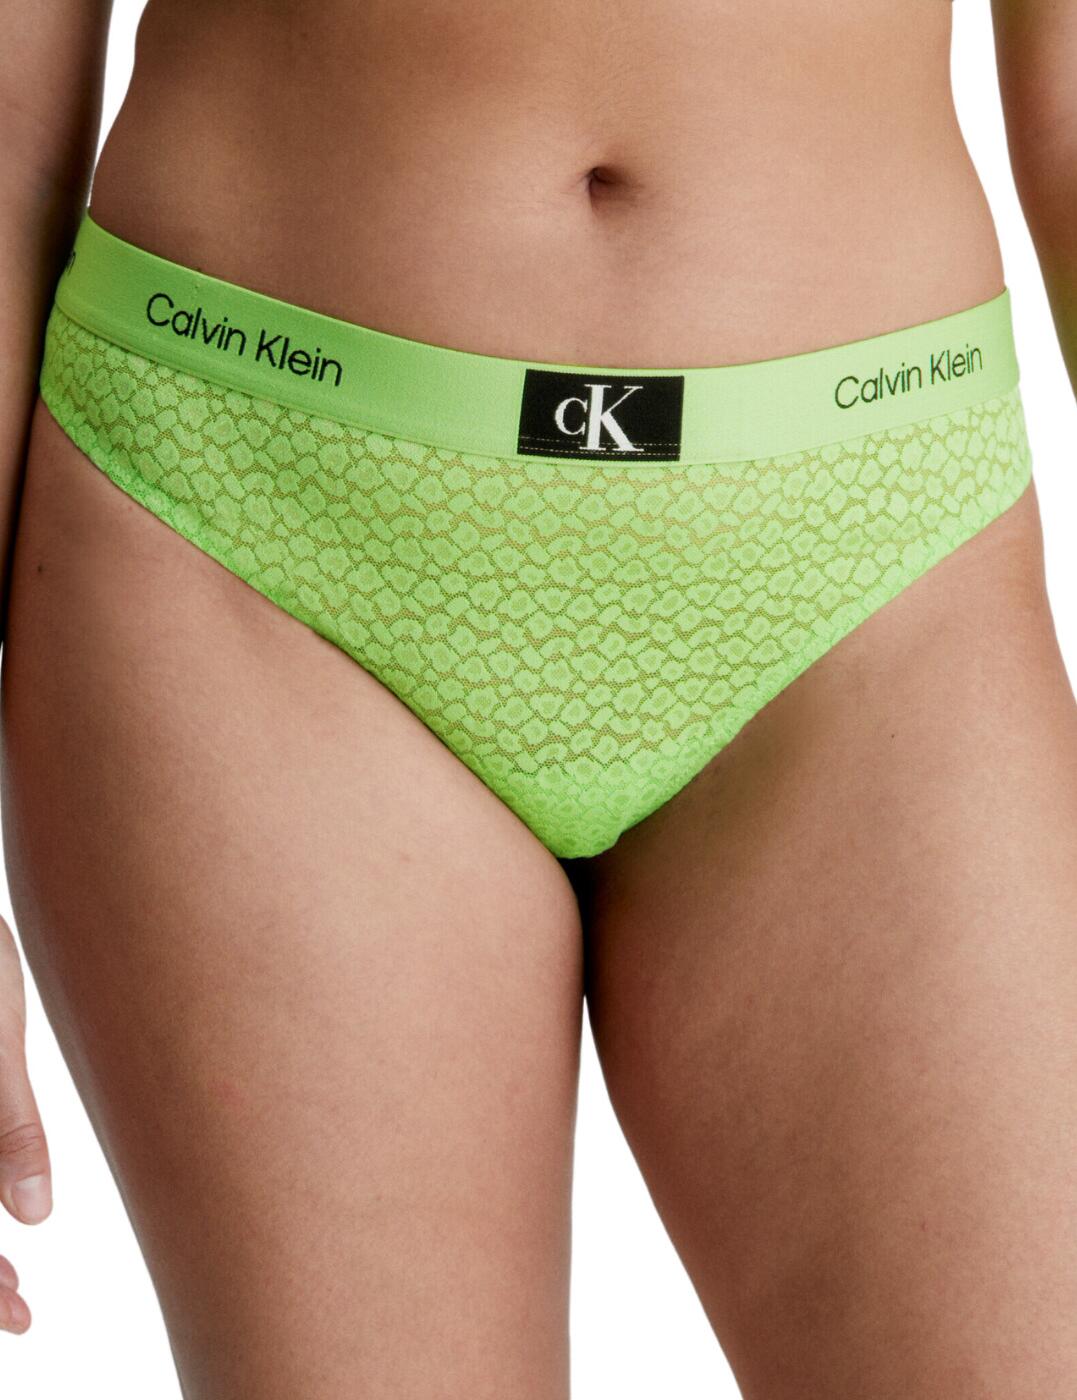 Calvin Klein CK One Plus Size Thong - Belle Lingerie